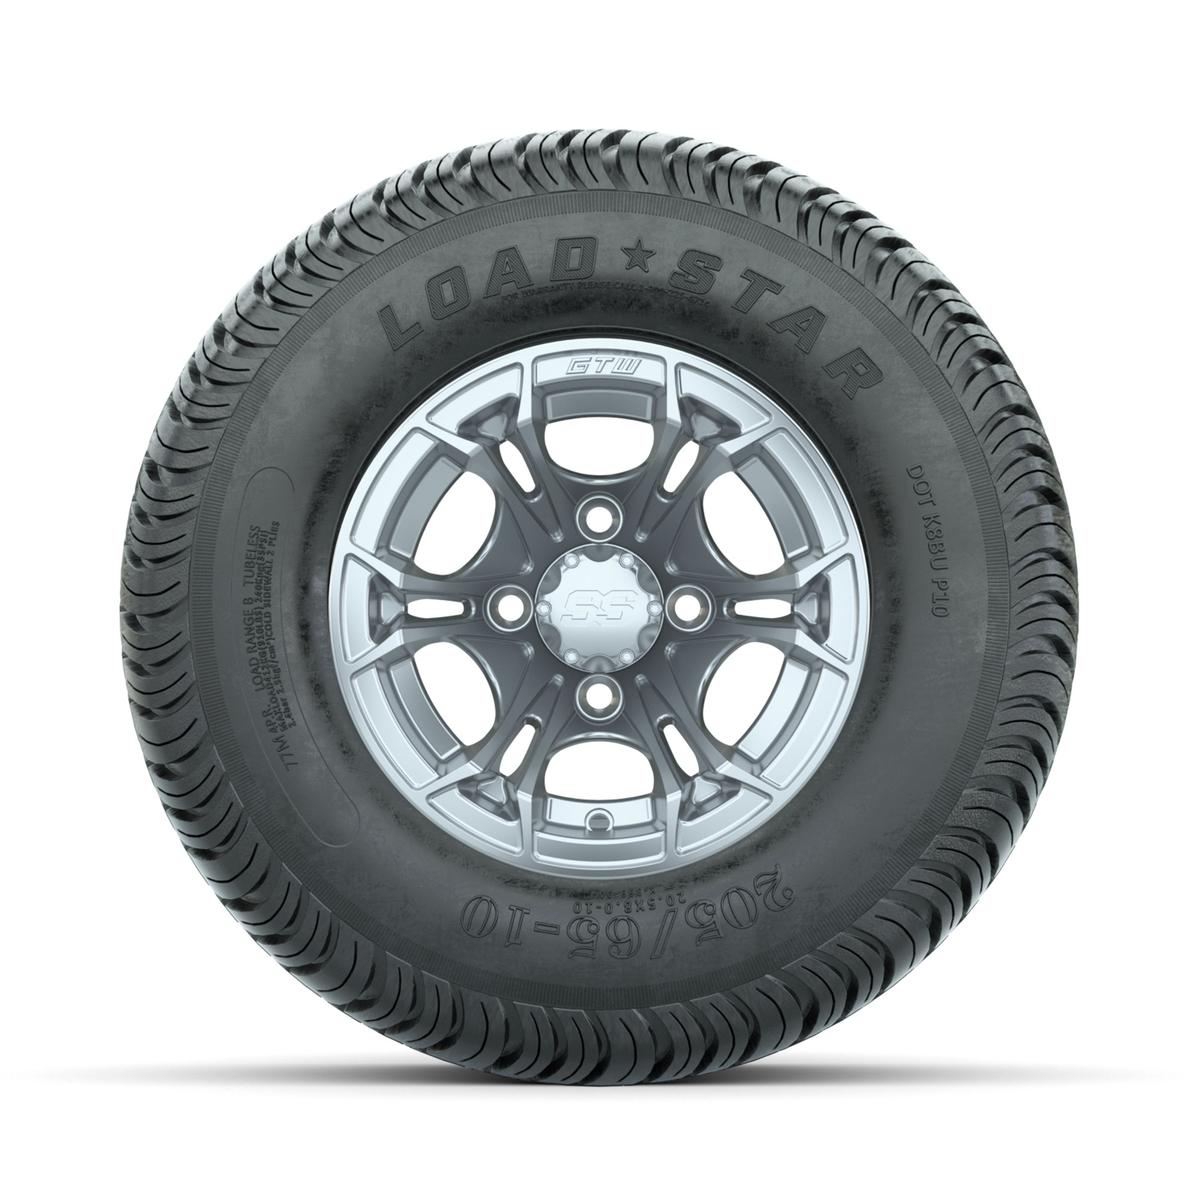 GTW Spyder Silver Brush 10 in Wheels with 205/65-10 Kenda Load Star Street Tires – Full Set